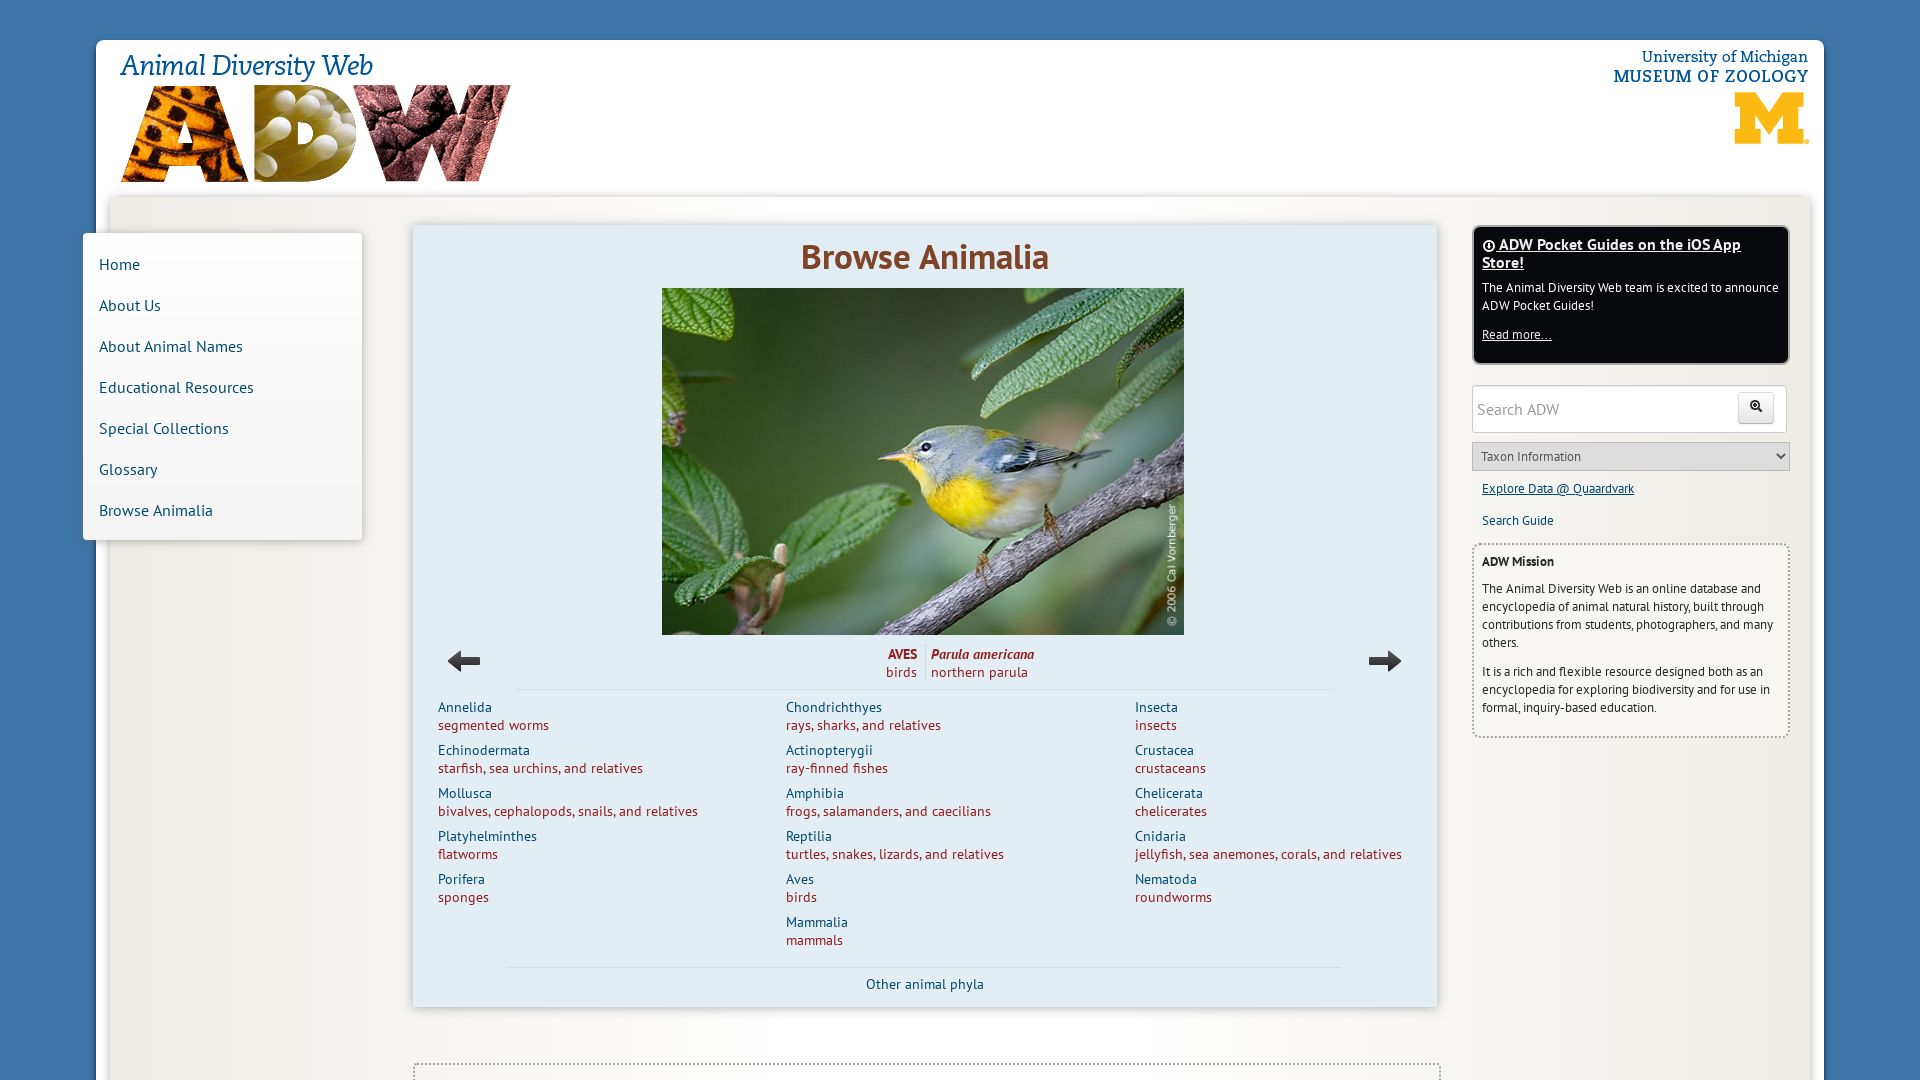 Website status animaldiversity.org is   ONLINE